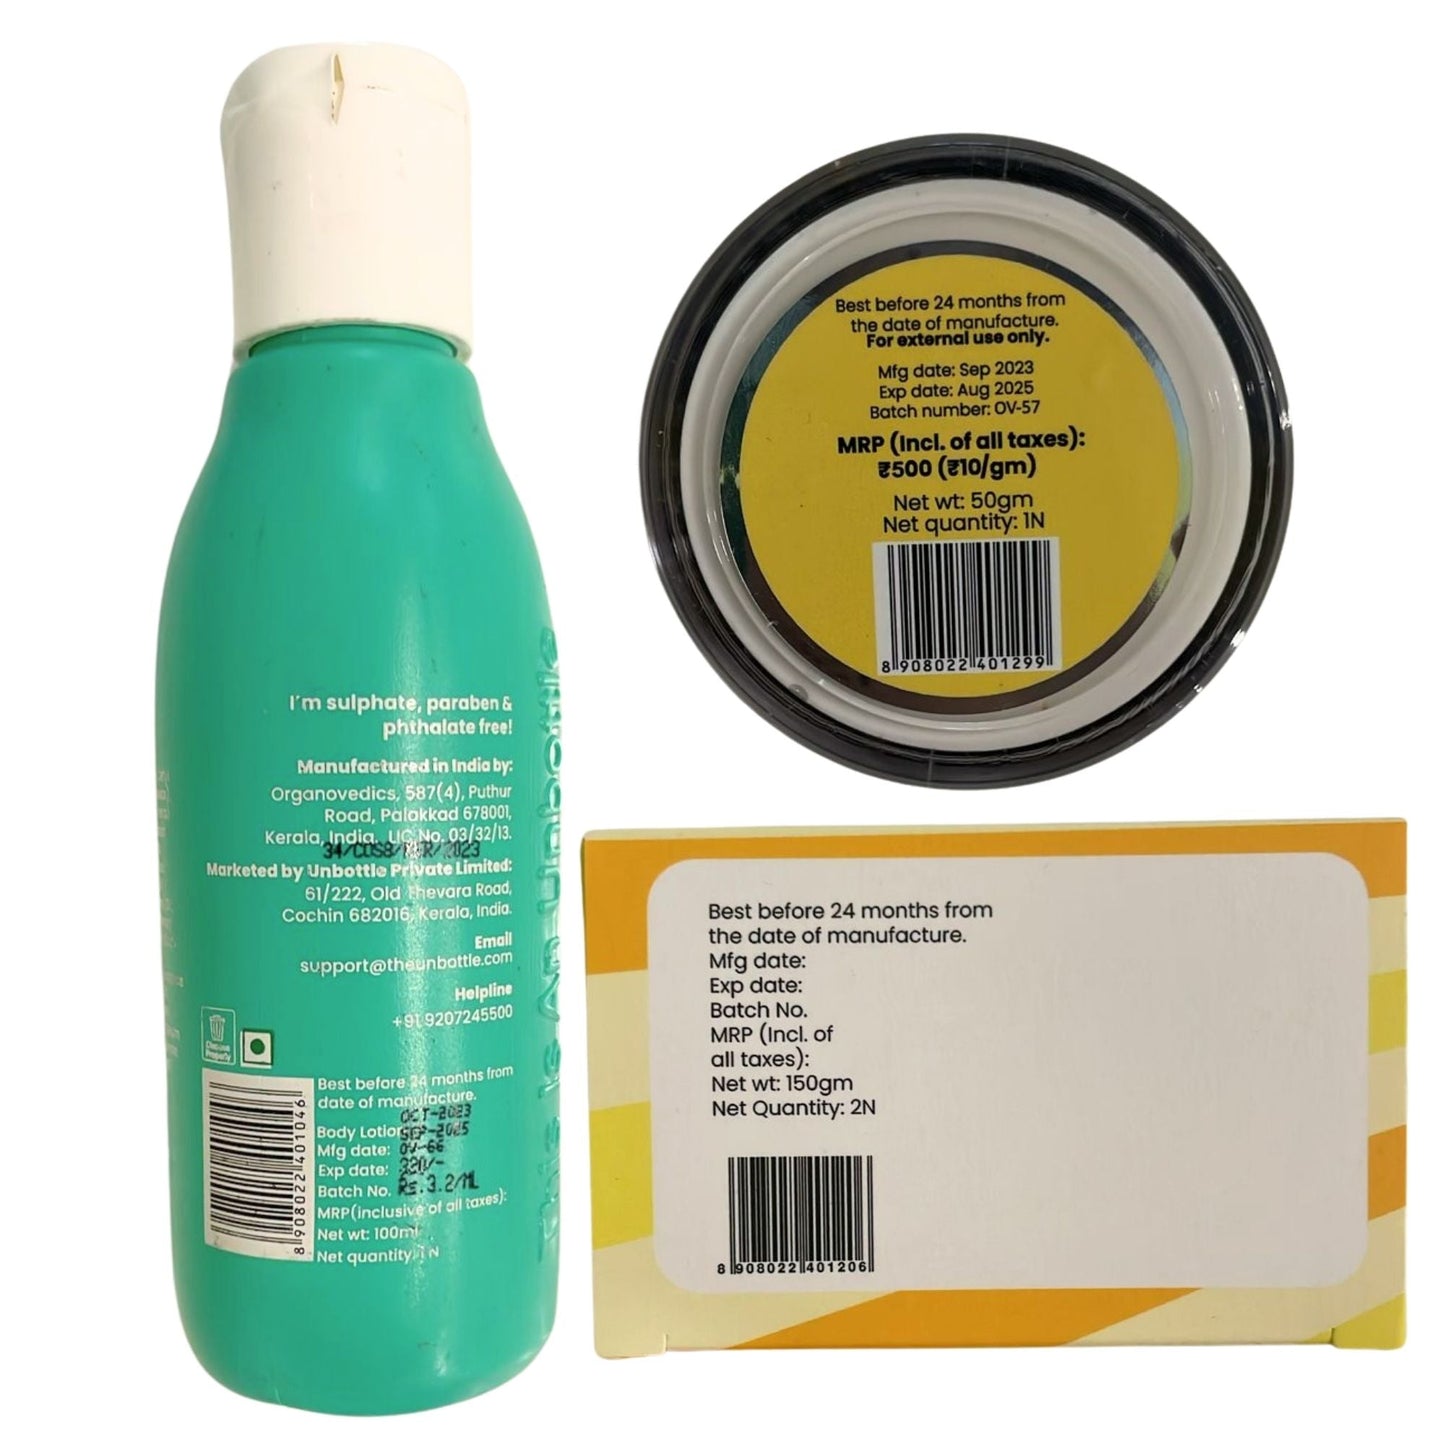 Dull Skin Soap 2x75g + Sunscreen 50g + FREE Summer Lotion 100ml